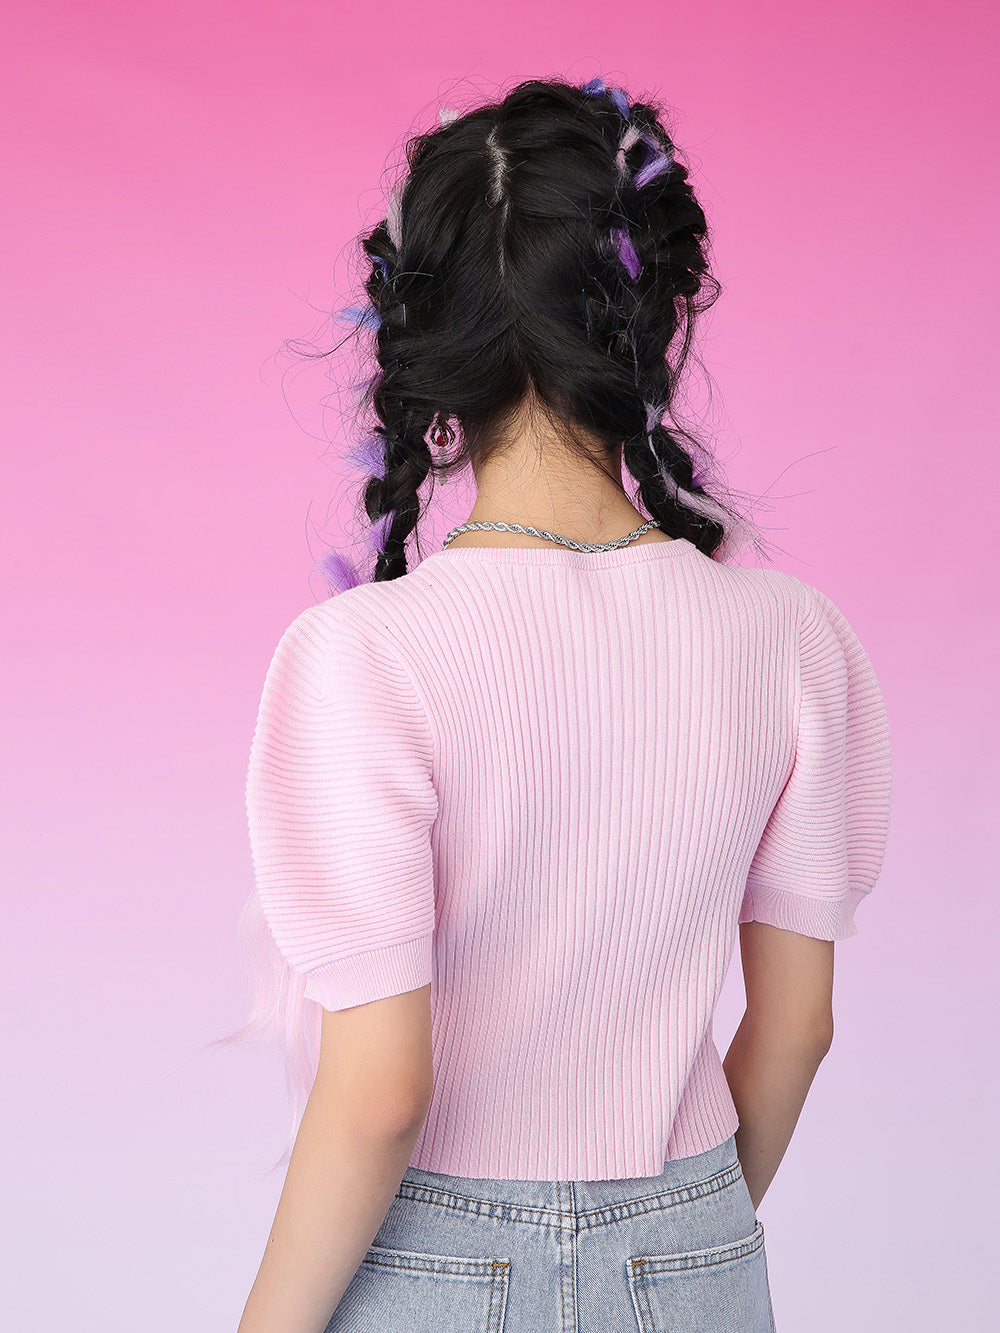 MUKZIN Short Sleeve Pink Knitted Sweater